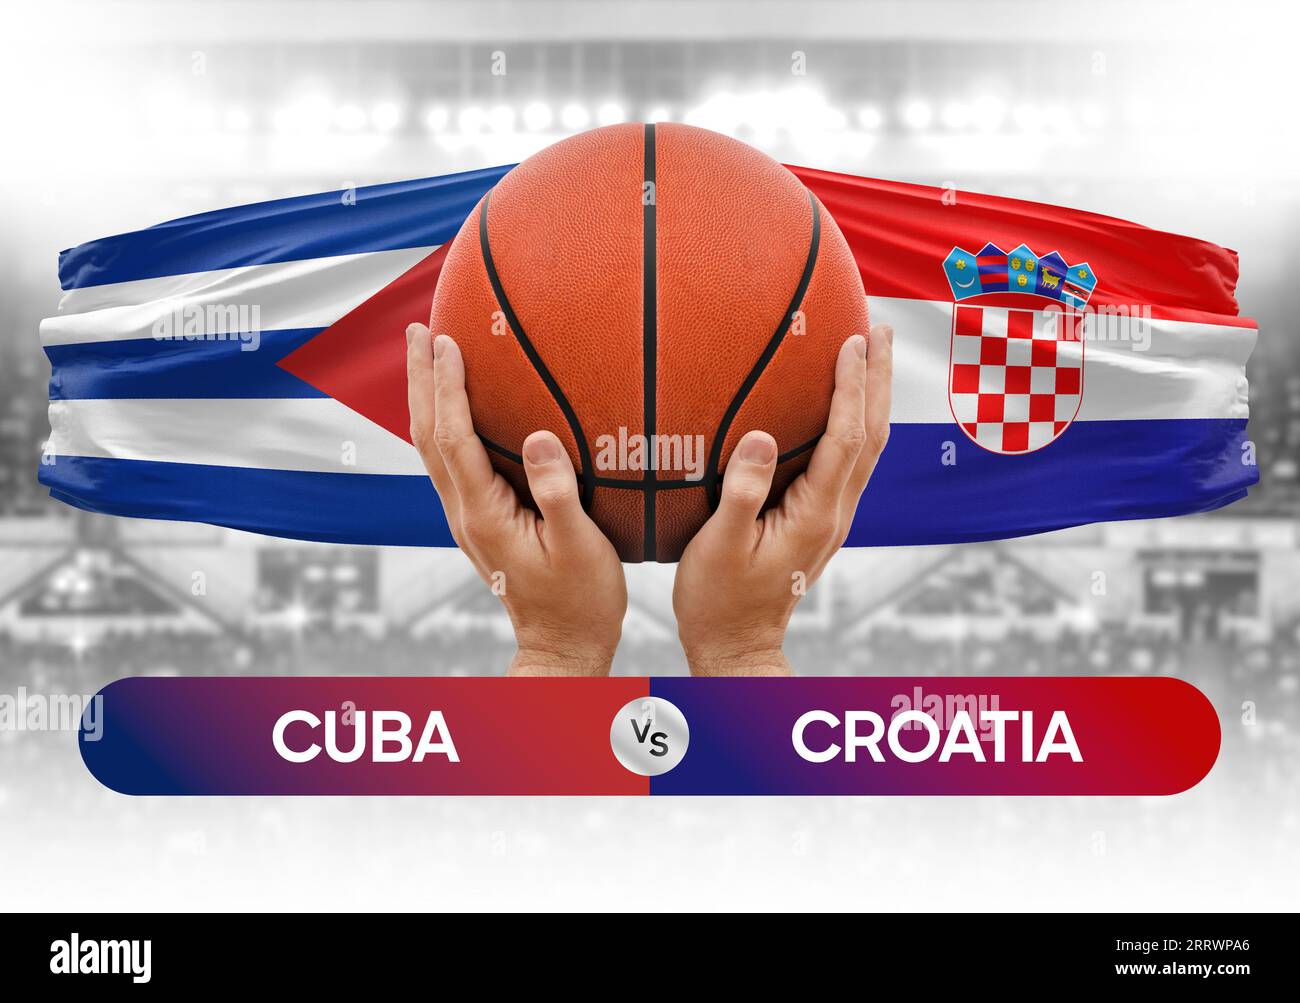 Cuba vs Croatia national basketball teams basket ball match competition cup concept image Stock Photo